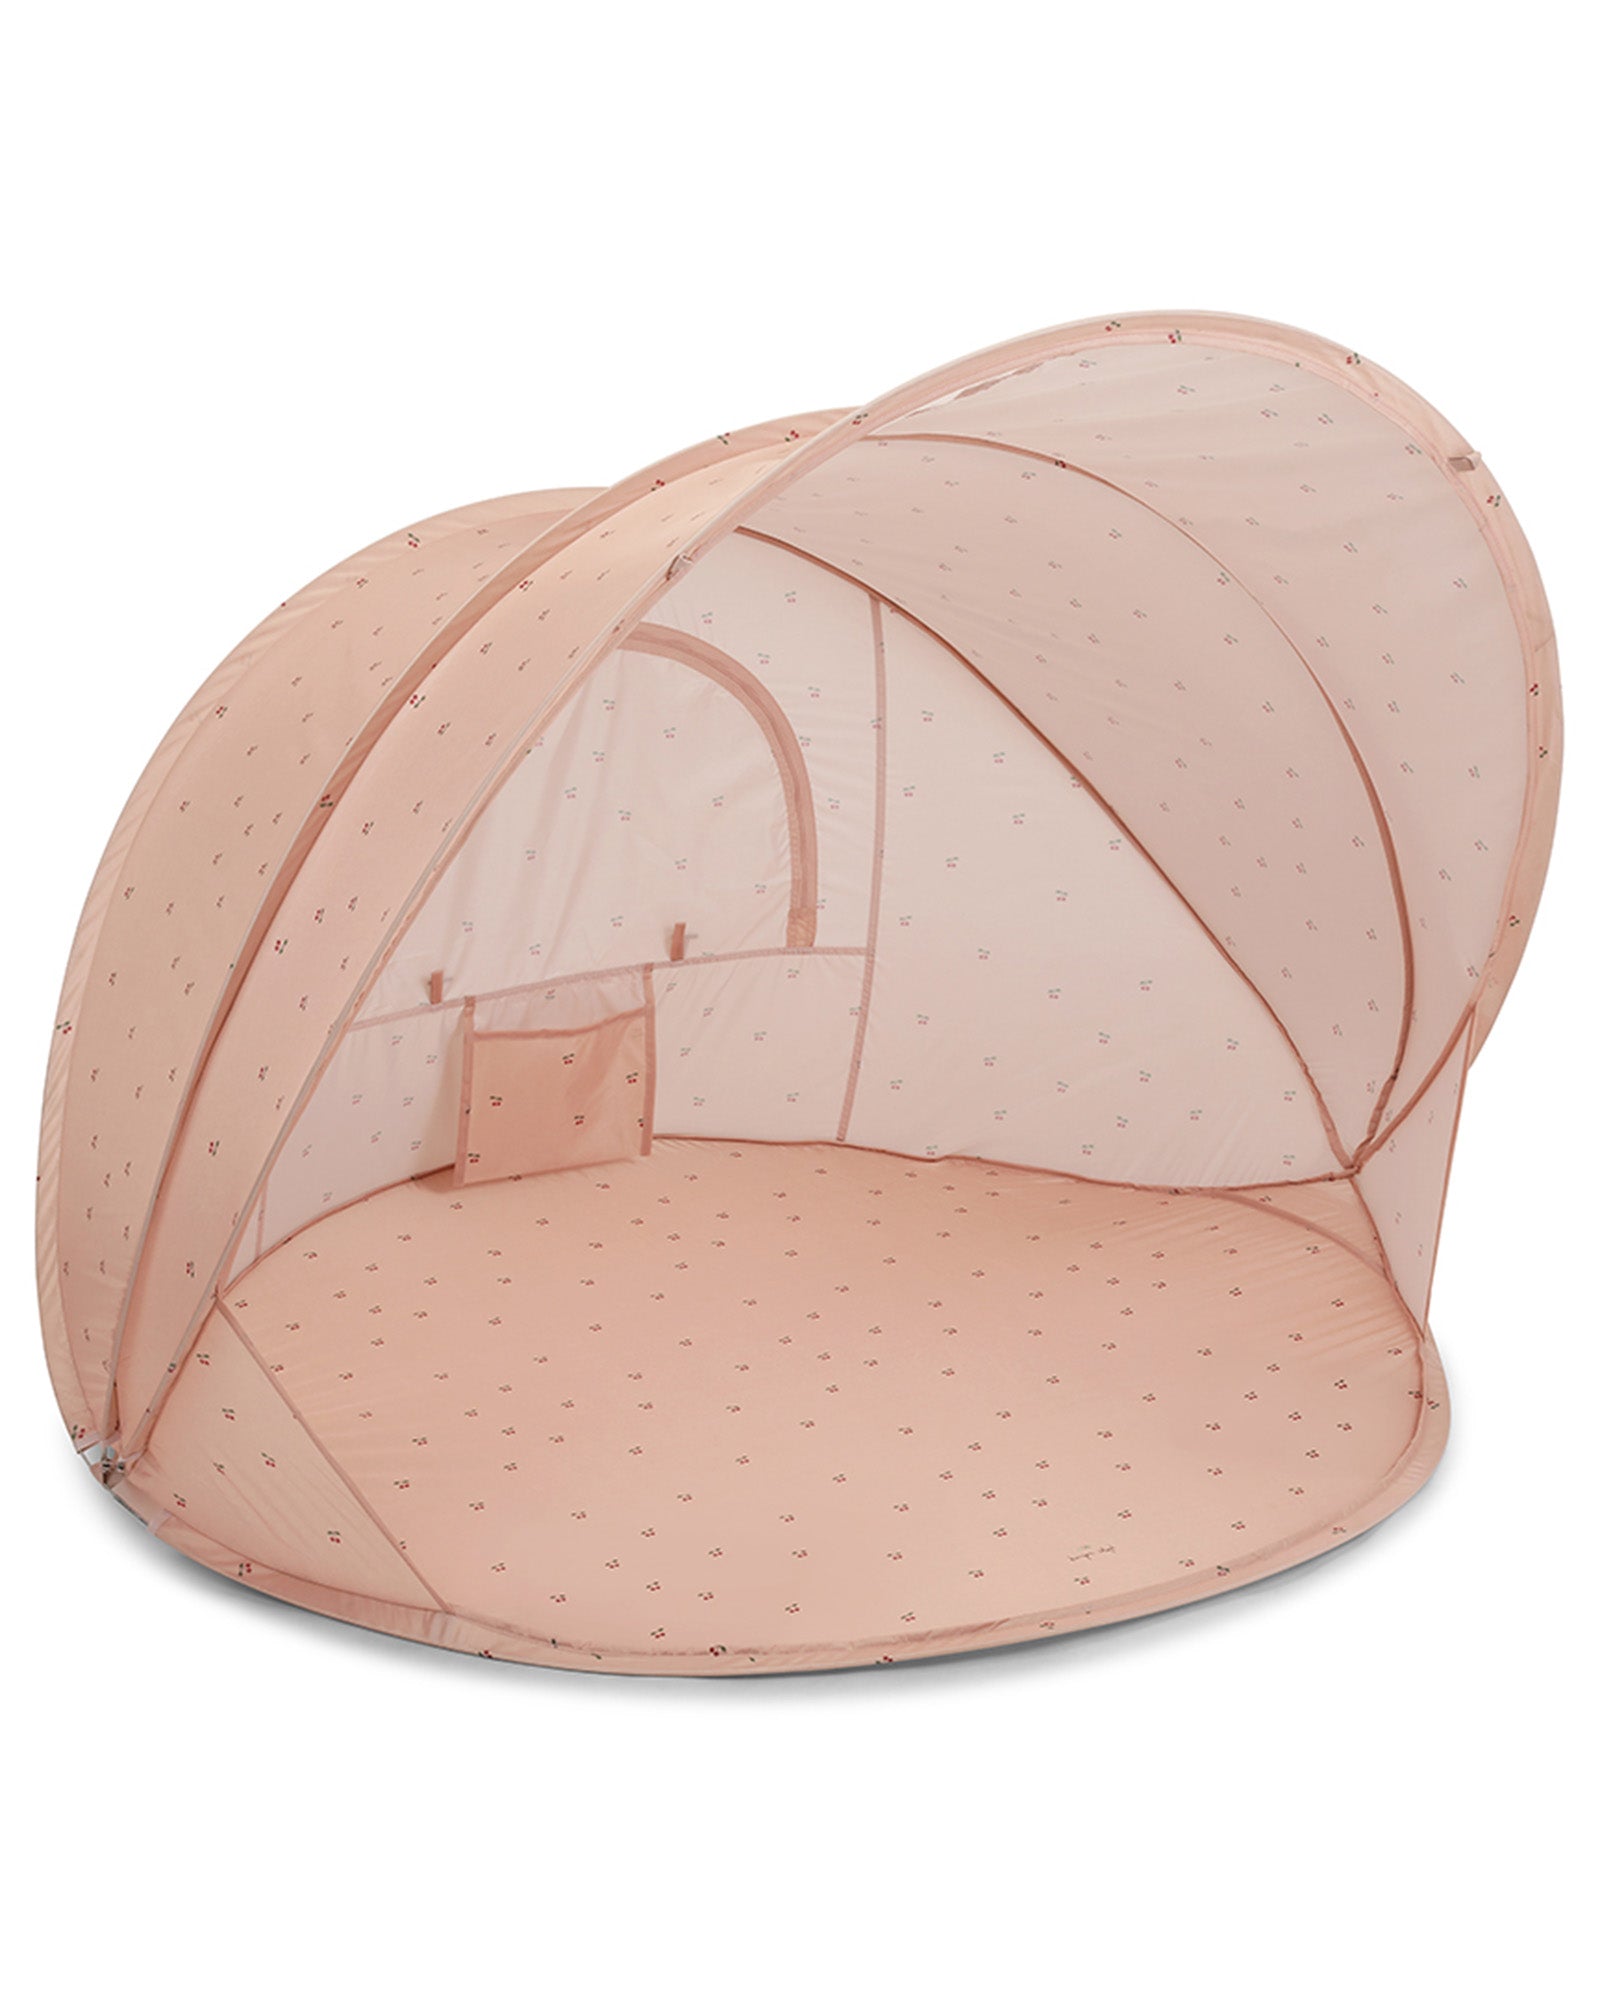 Pop Up Beach Tent, Portable Outdoor Beach Shade Tent, UPF 50+ Baby Beach Shelter, Easy Setup Windproof Waterproof Beach Canopy